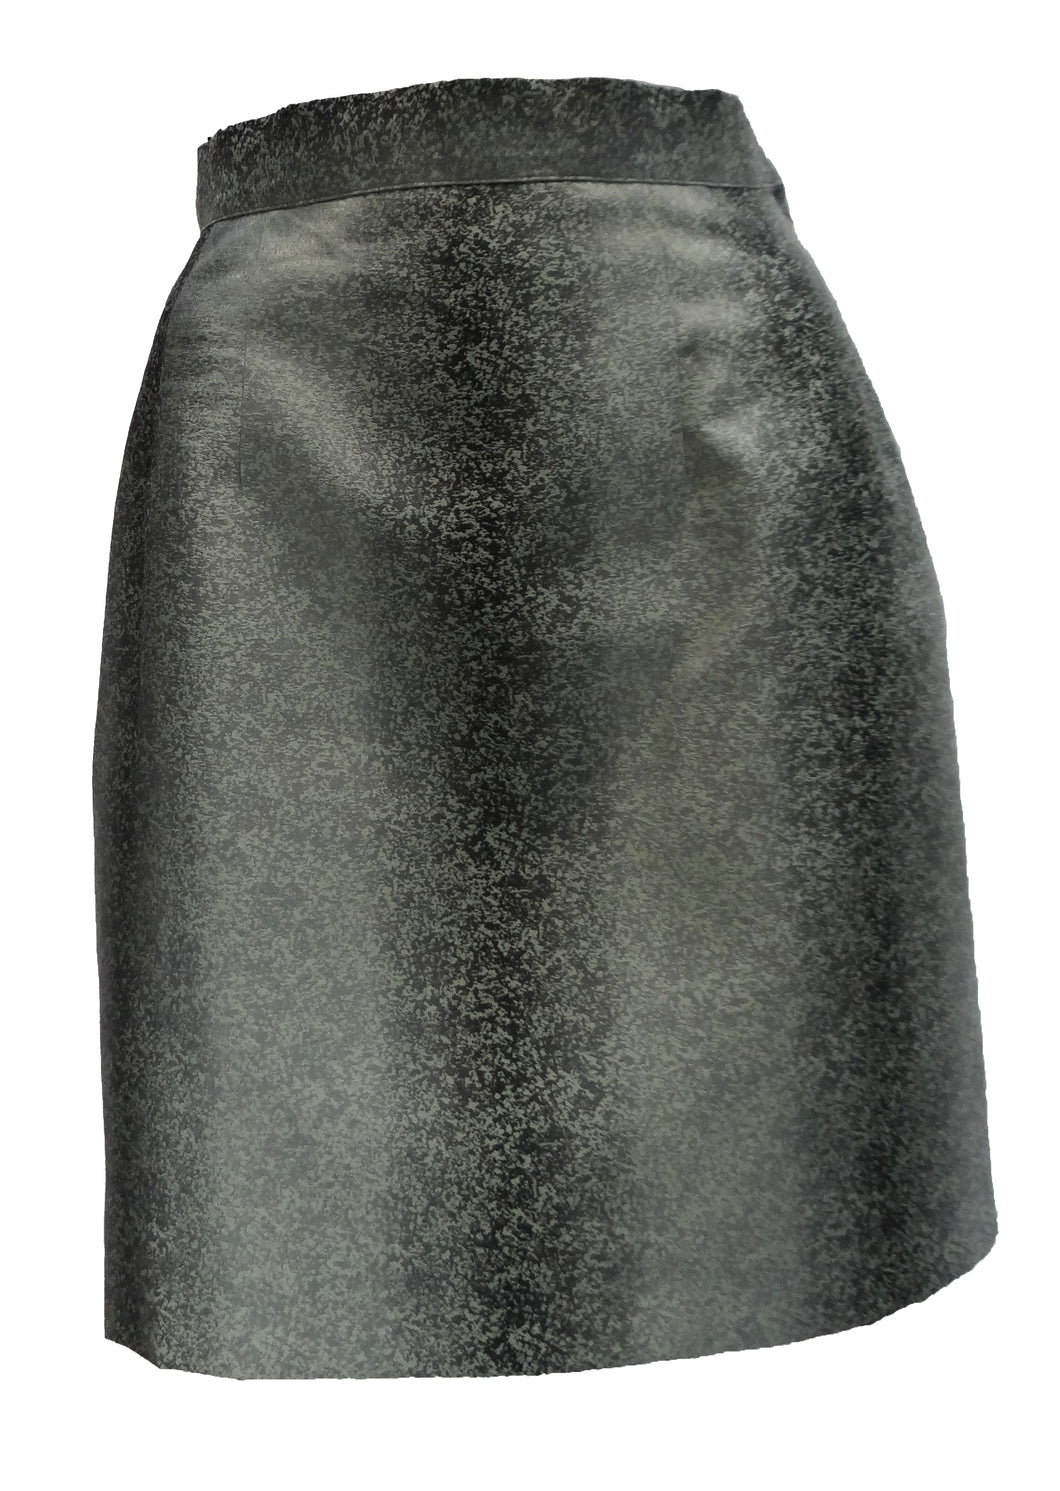 Vintage Ozbek Pencil Skirt in Mottled Brocade, 1990s, UK10-12